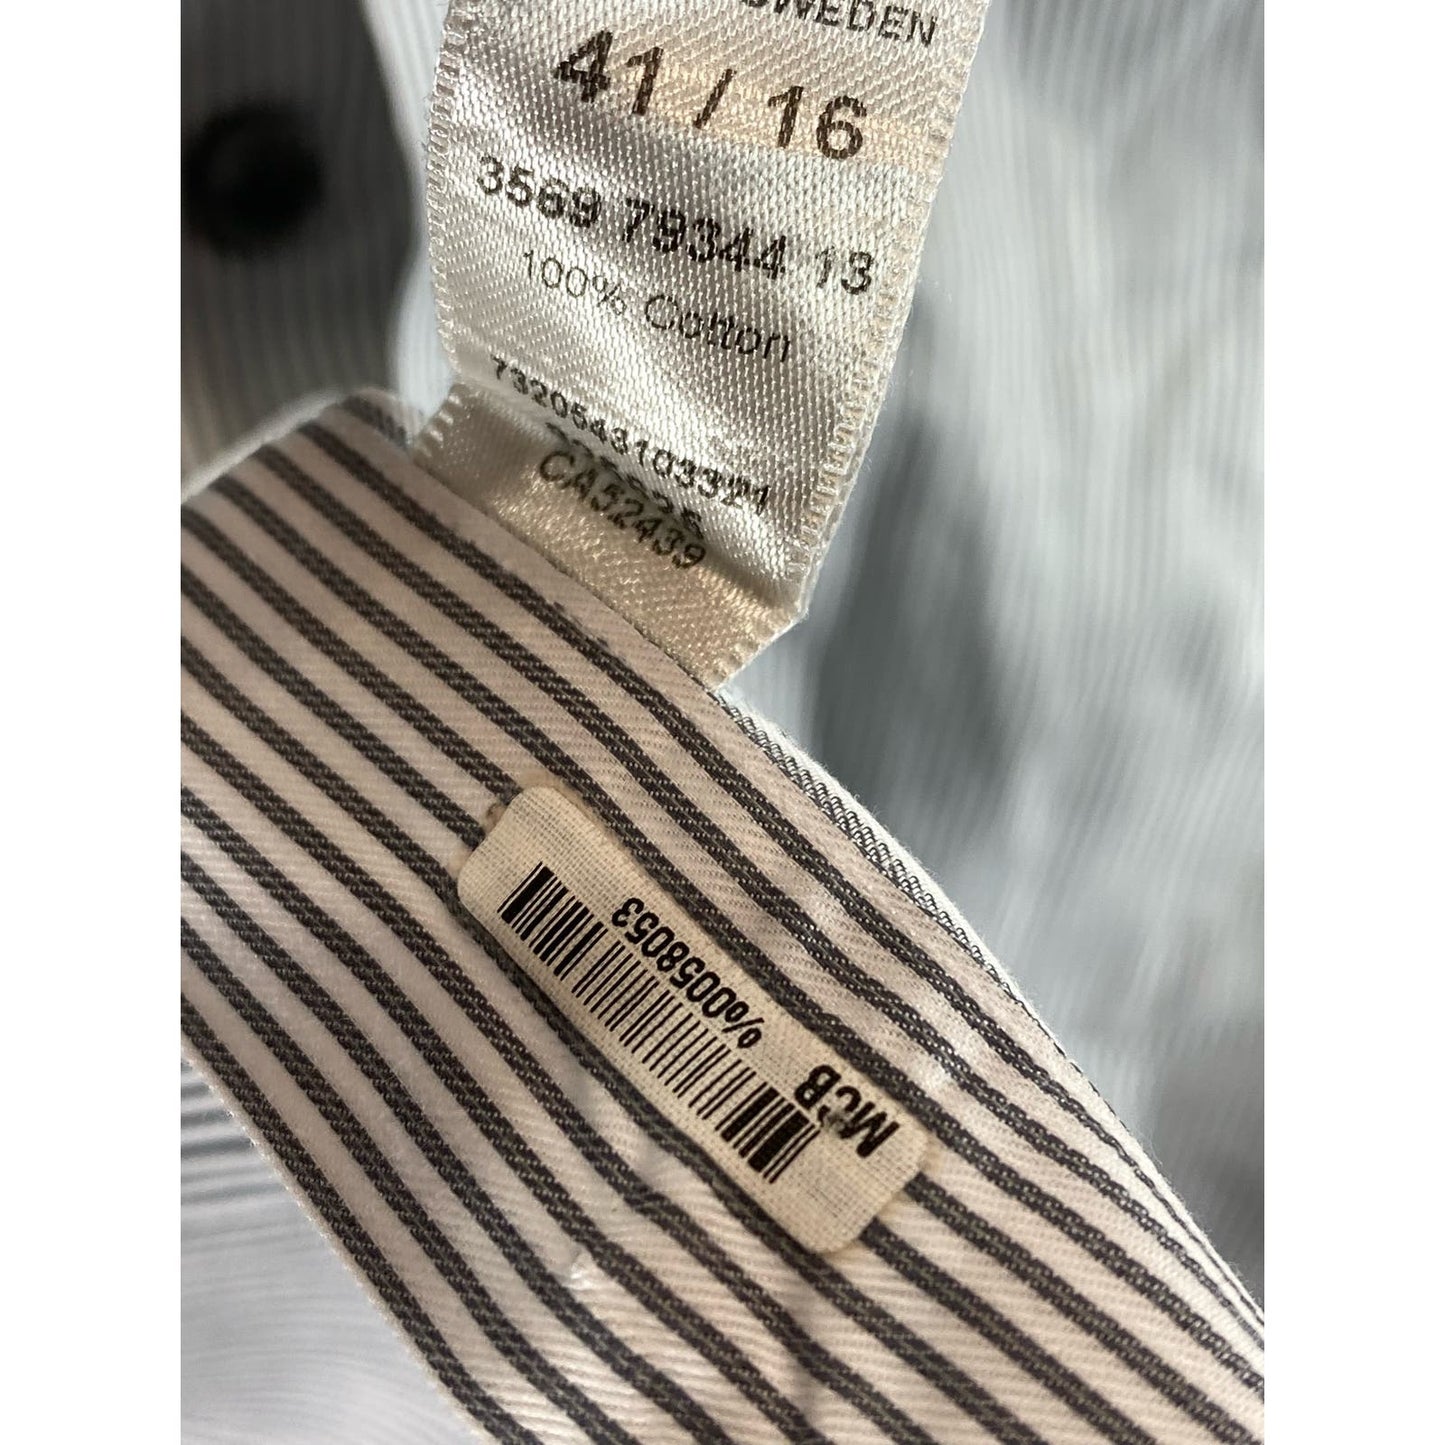 ETON Men's Gray Striped Contemporary-Fit Button-Up Long Sleeve Shirt SZ 16